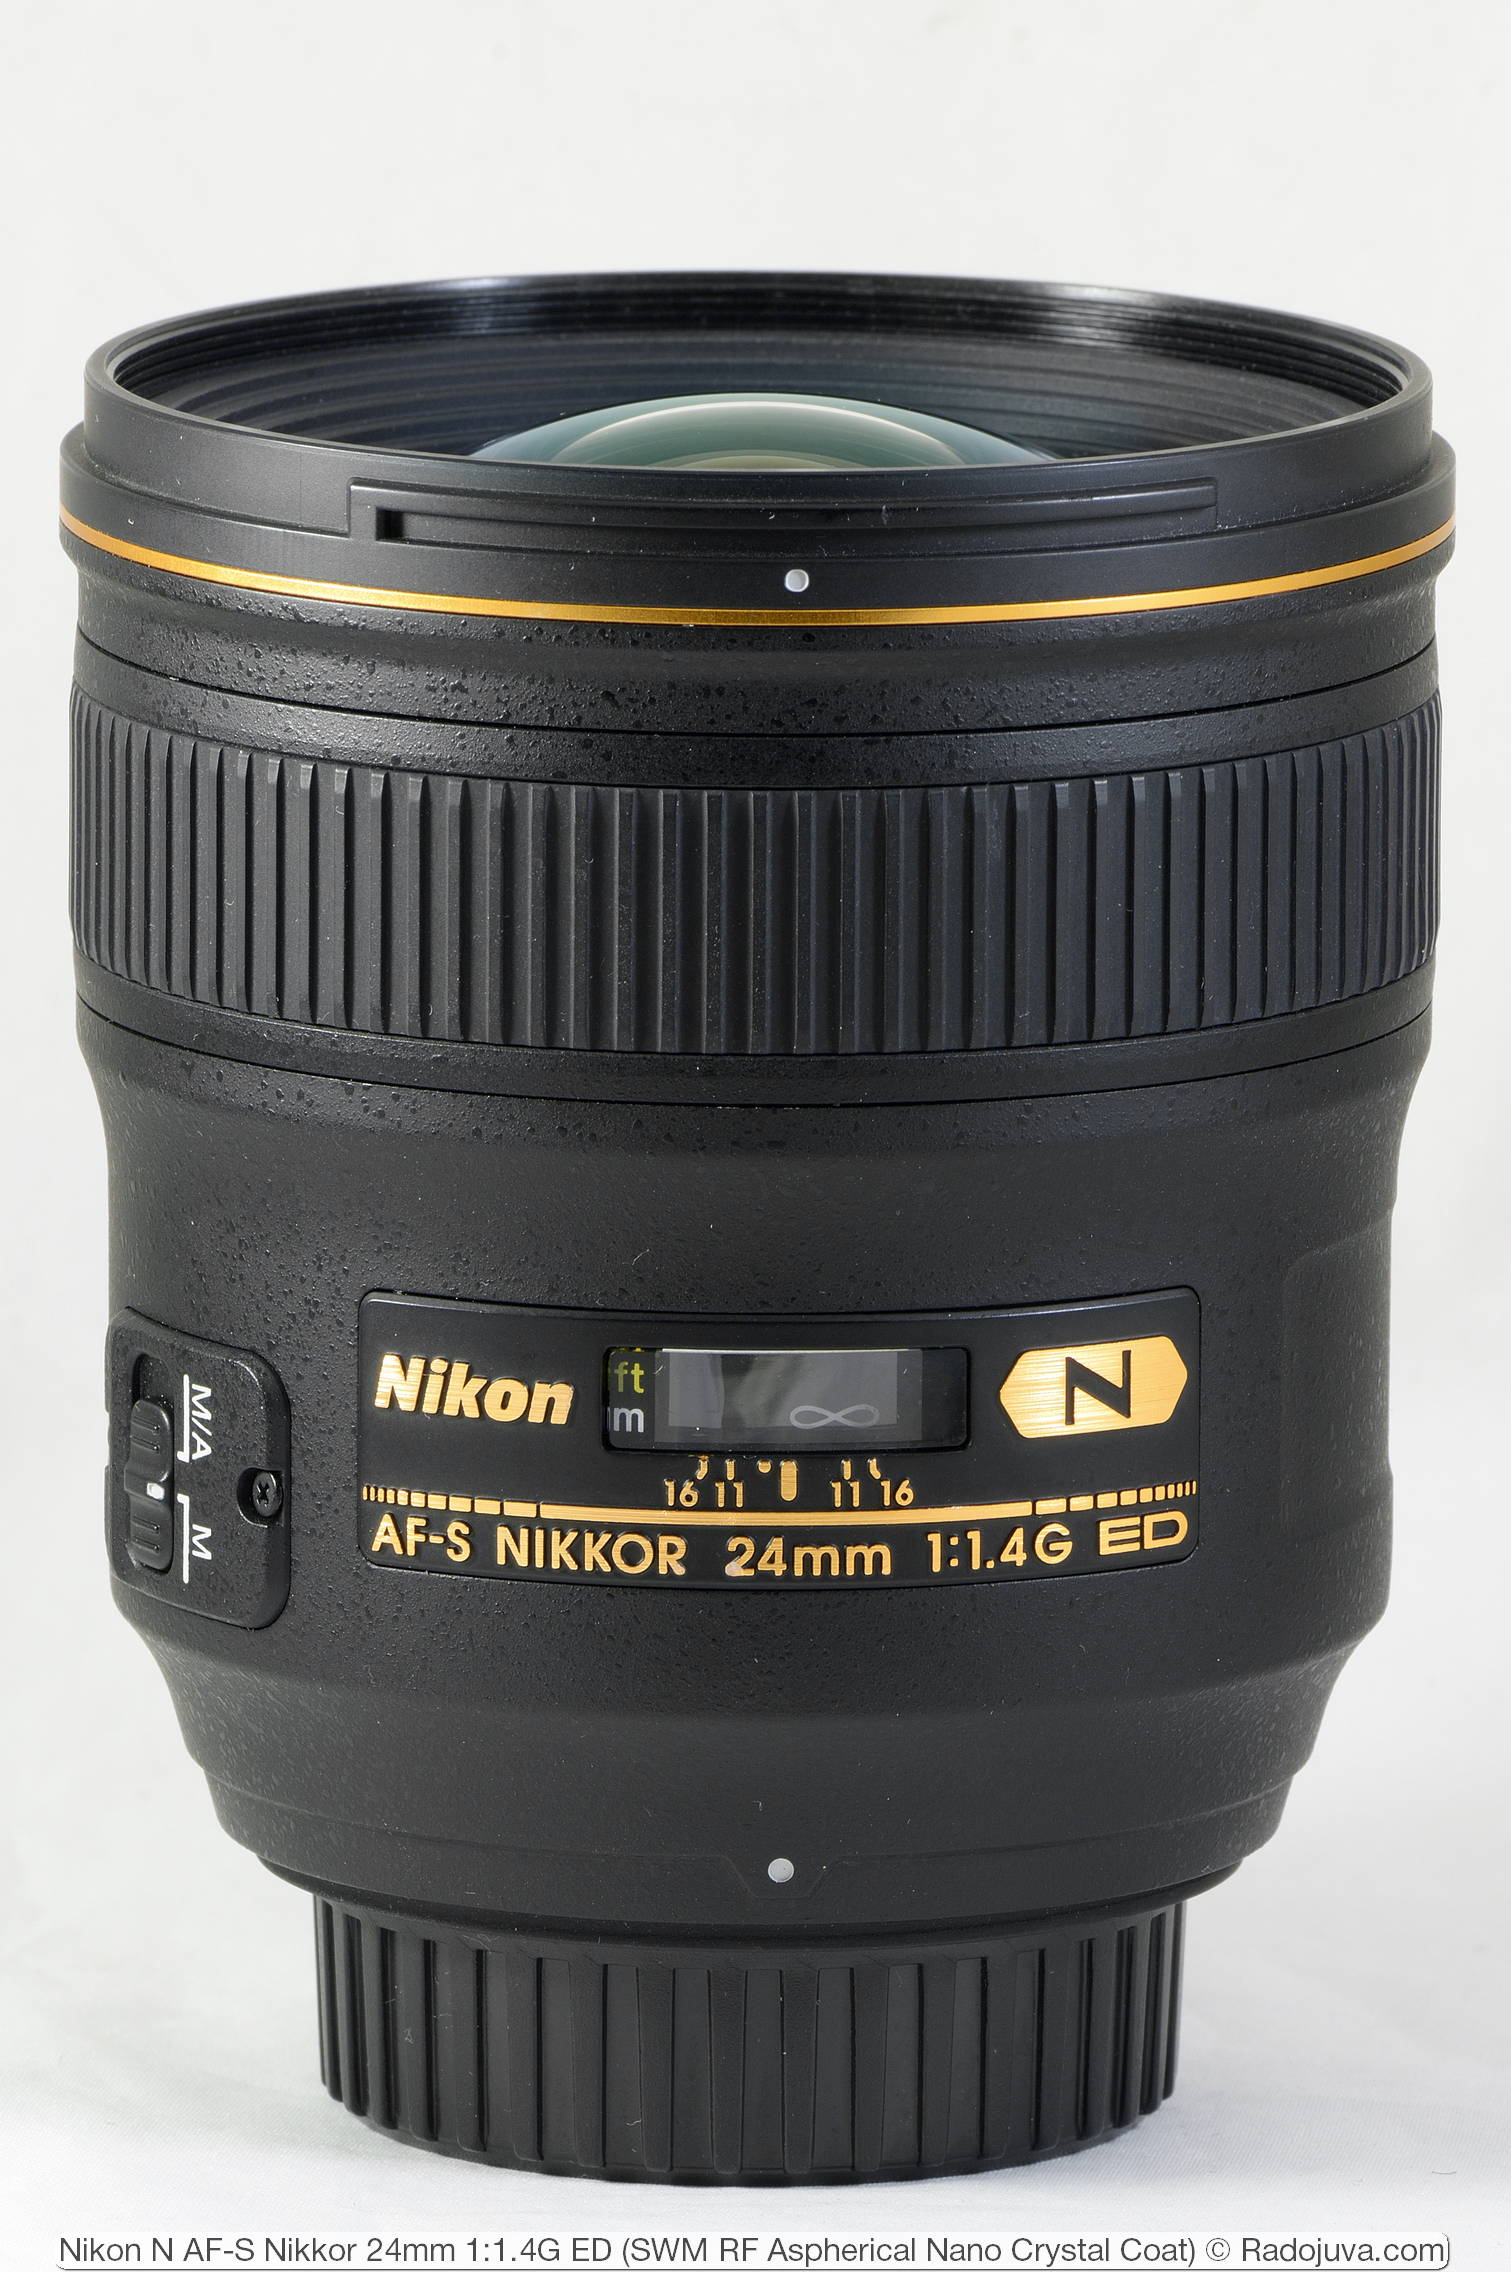 Nikon N AF-S Nikkor 24mm 1:1.4G ED (SWM RF Aspherical Nano Crystal Coat)